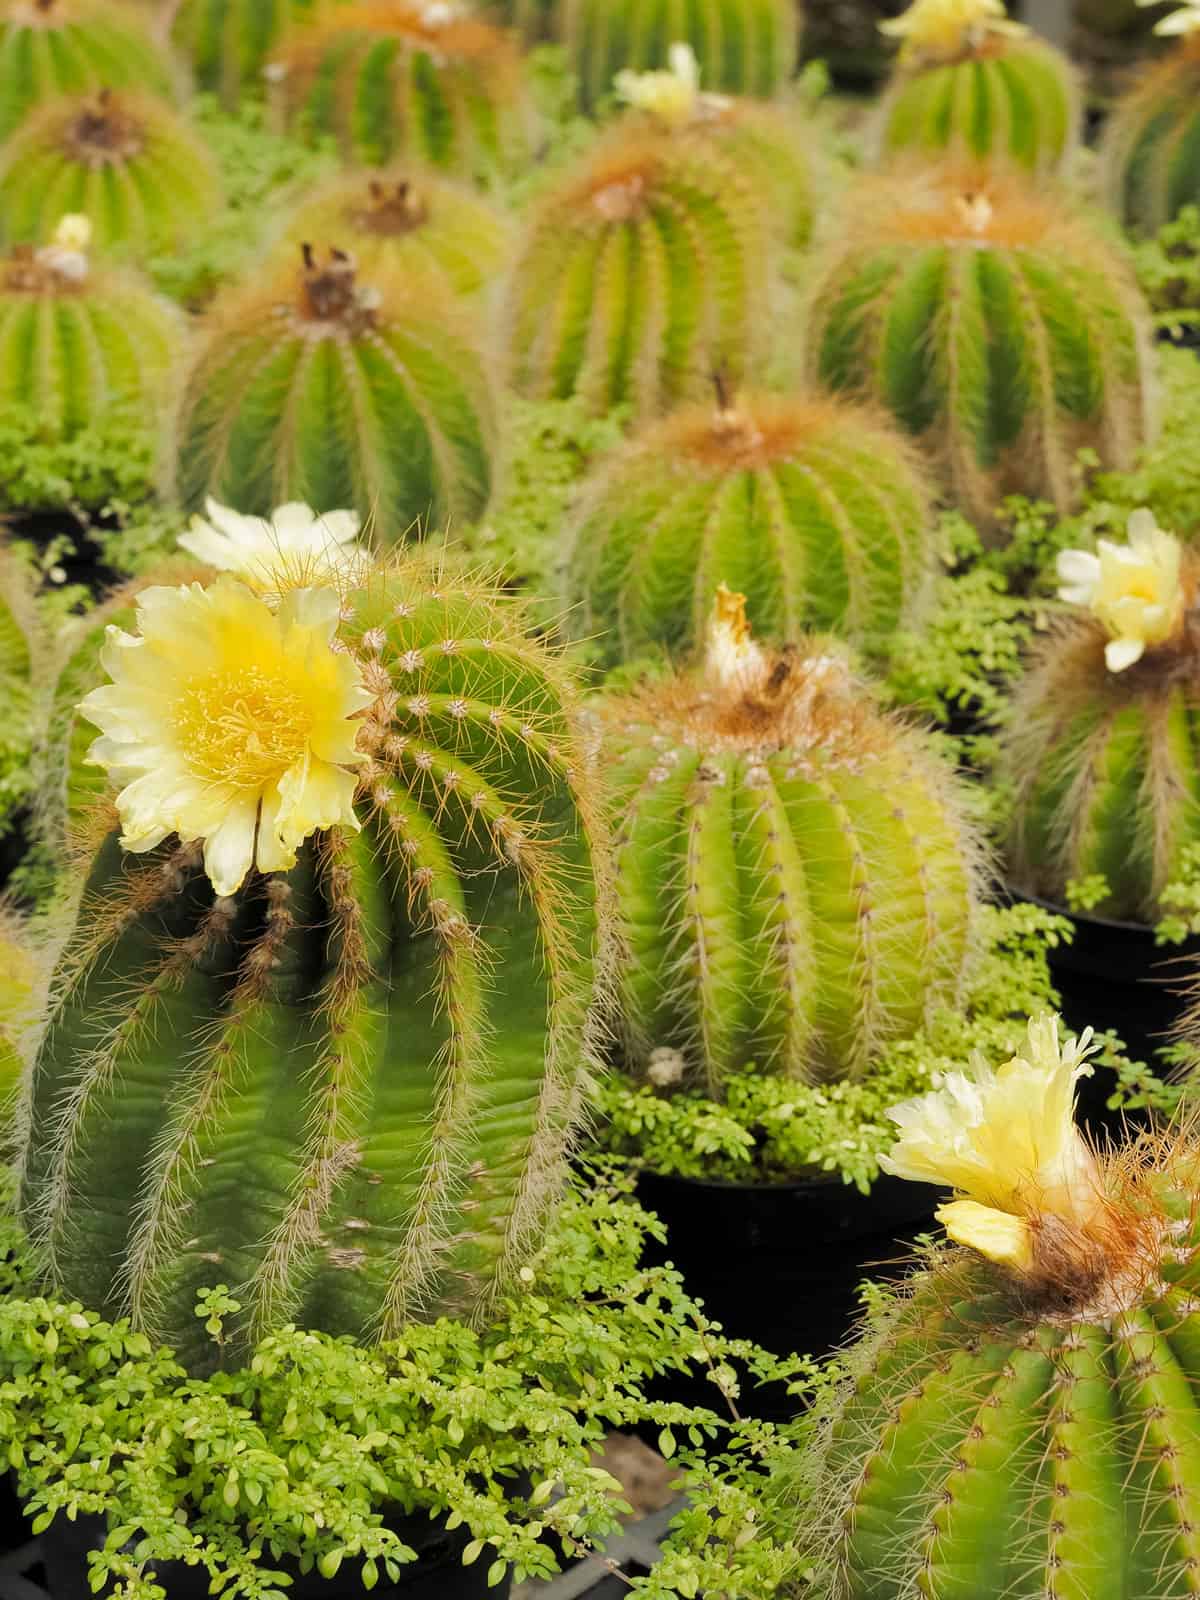 Golden barrel cactus balls blooming brightly